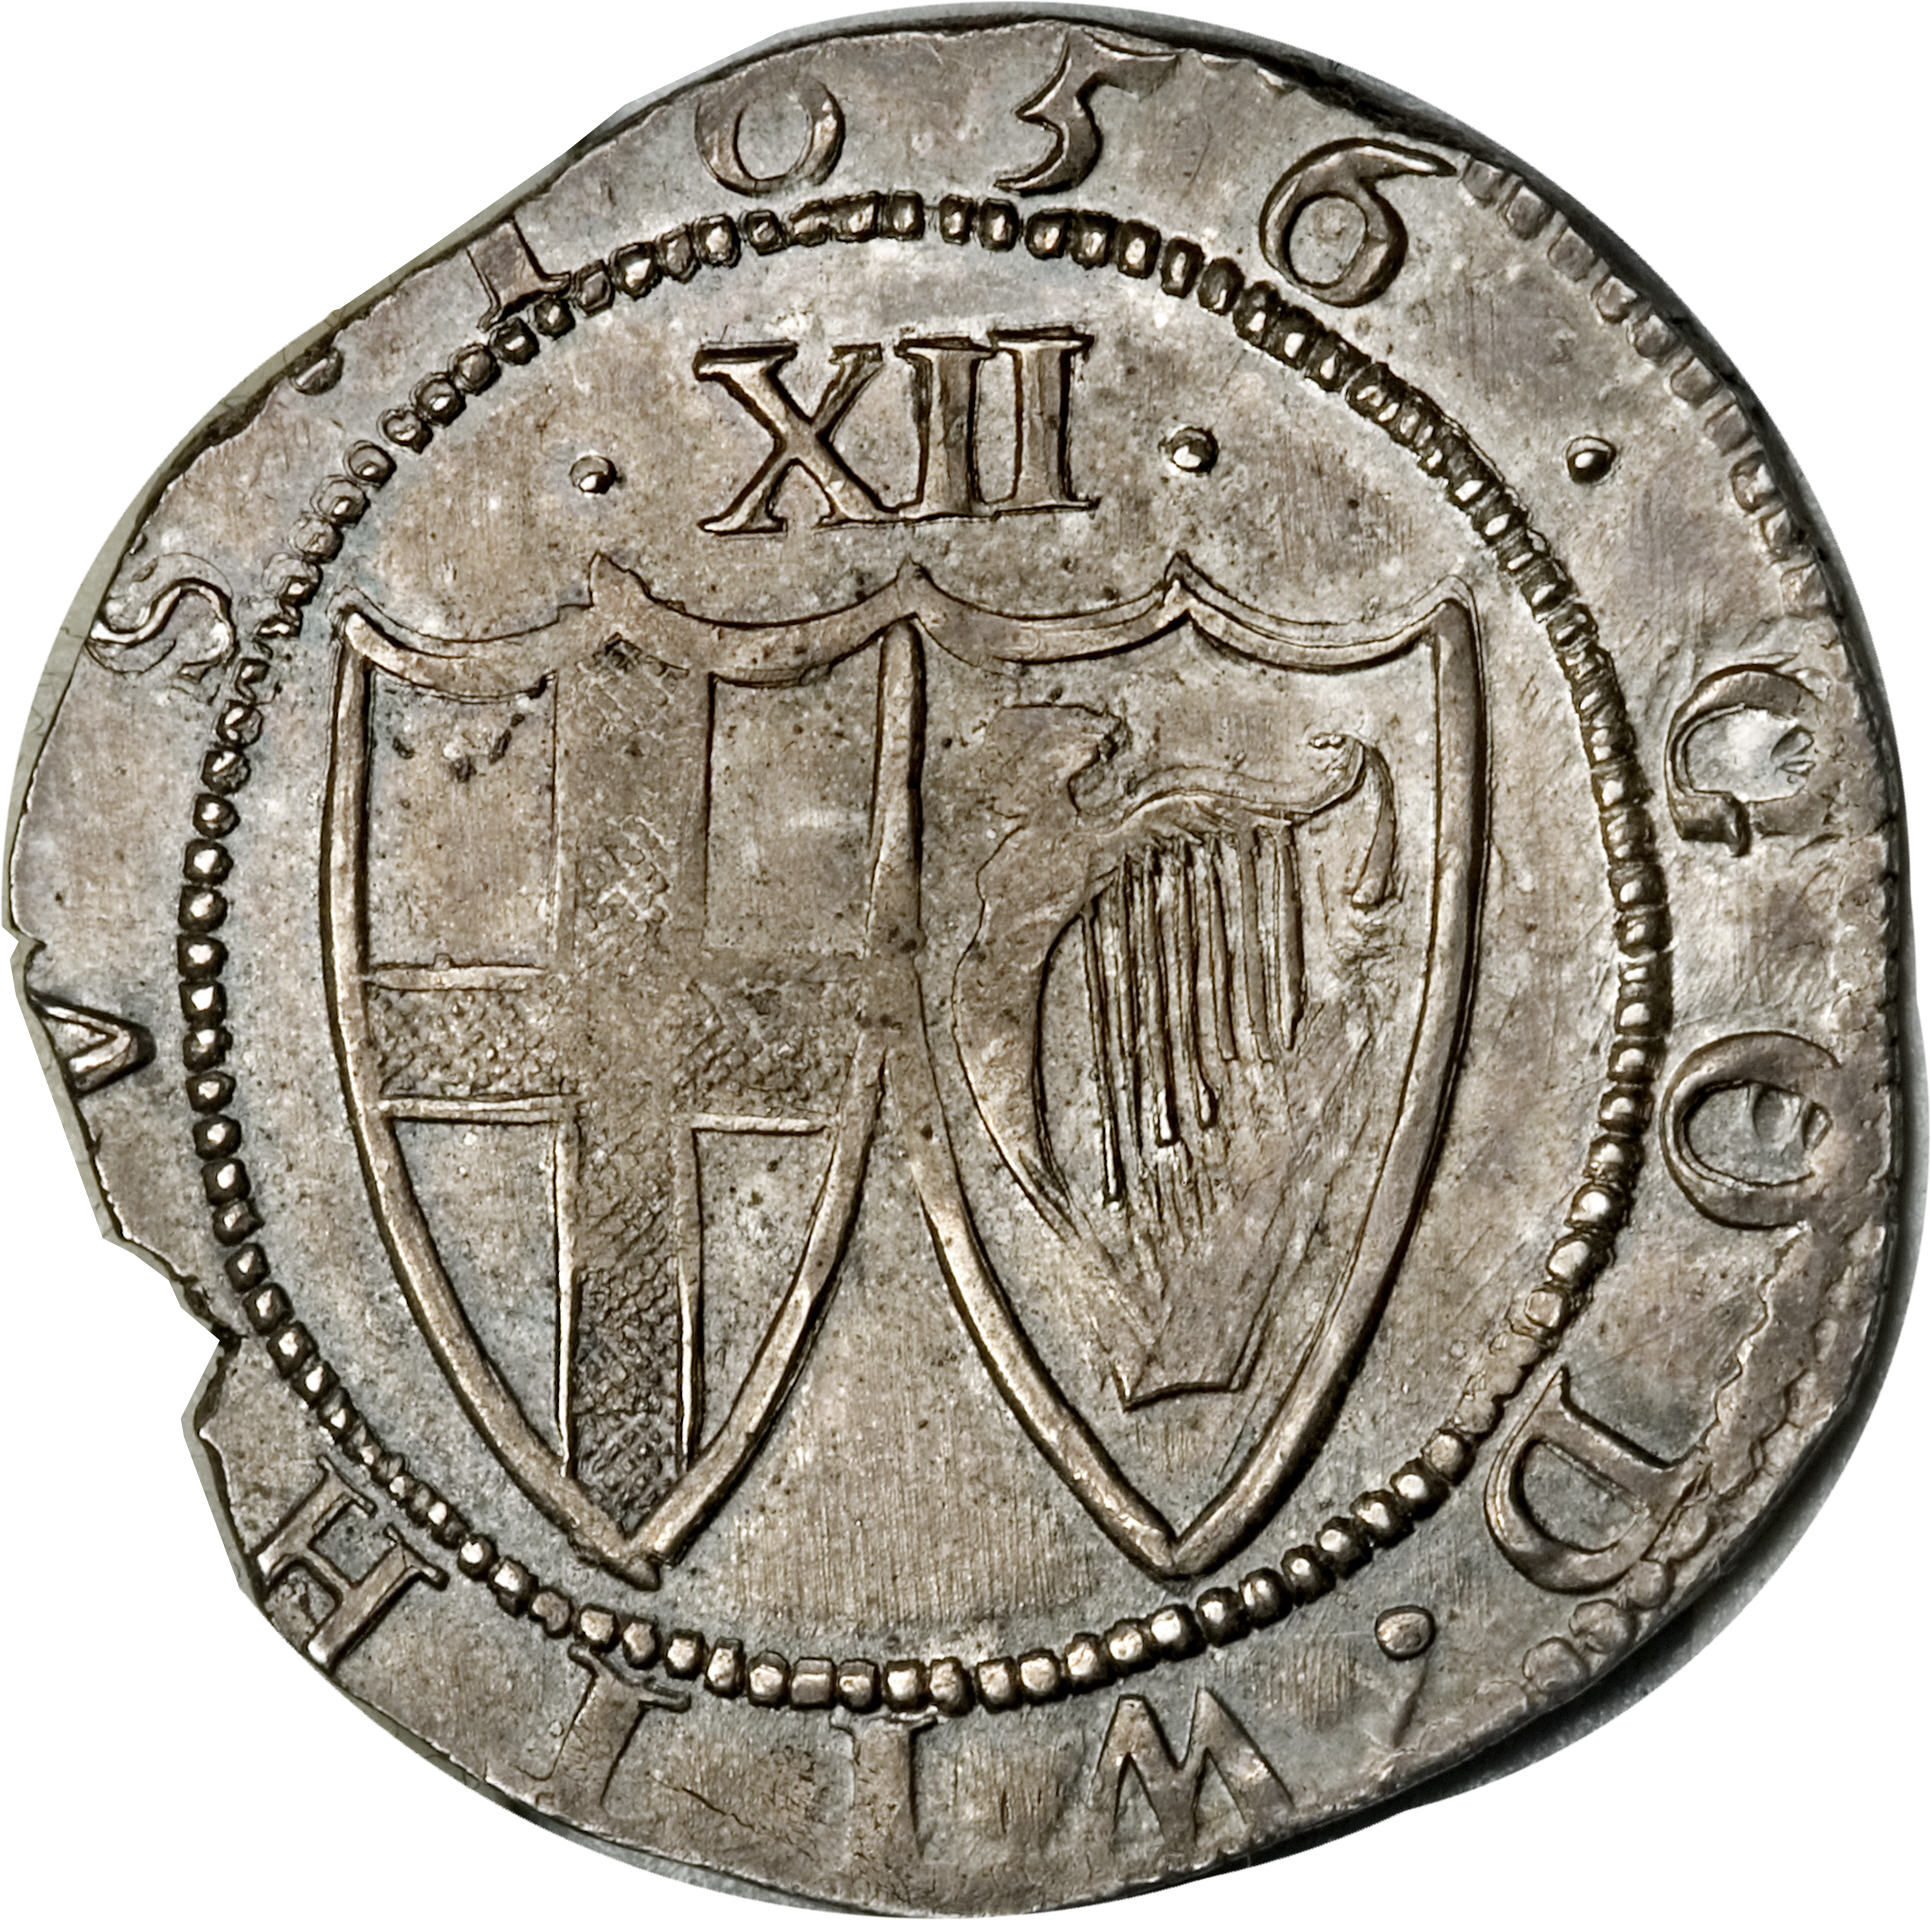 1649 англия. Шиллинг 1529 год. Шиллинг в средние века. Commonwealth of England 1649. Монета 1 шиллинг Великобритания.